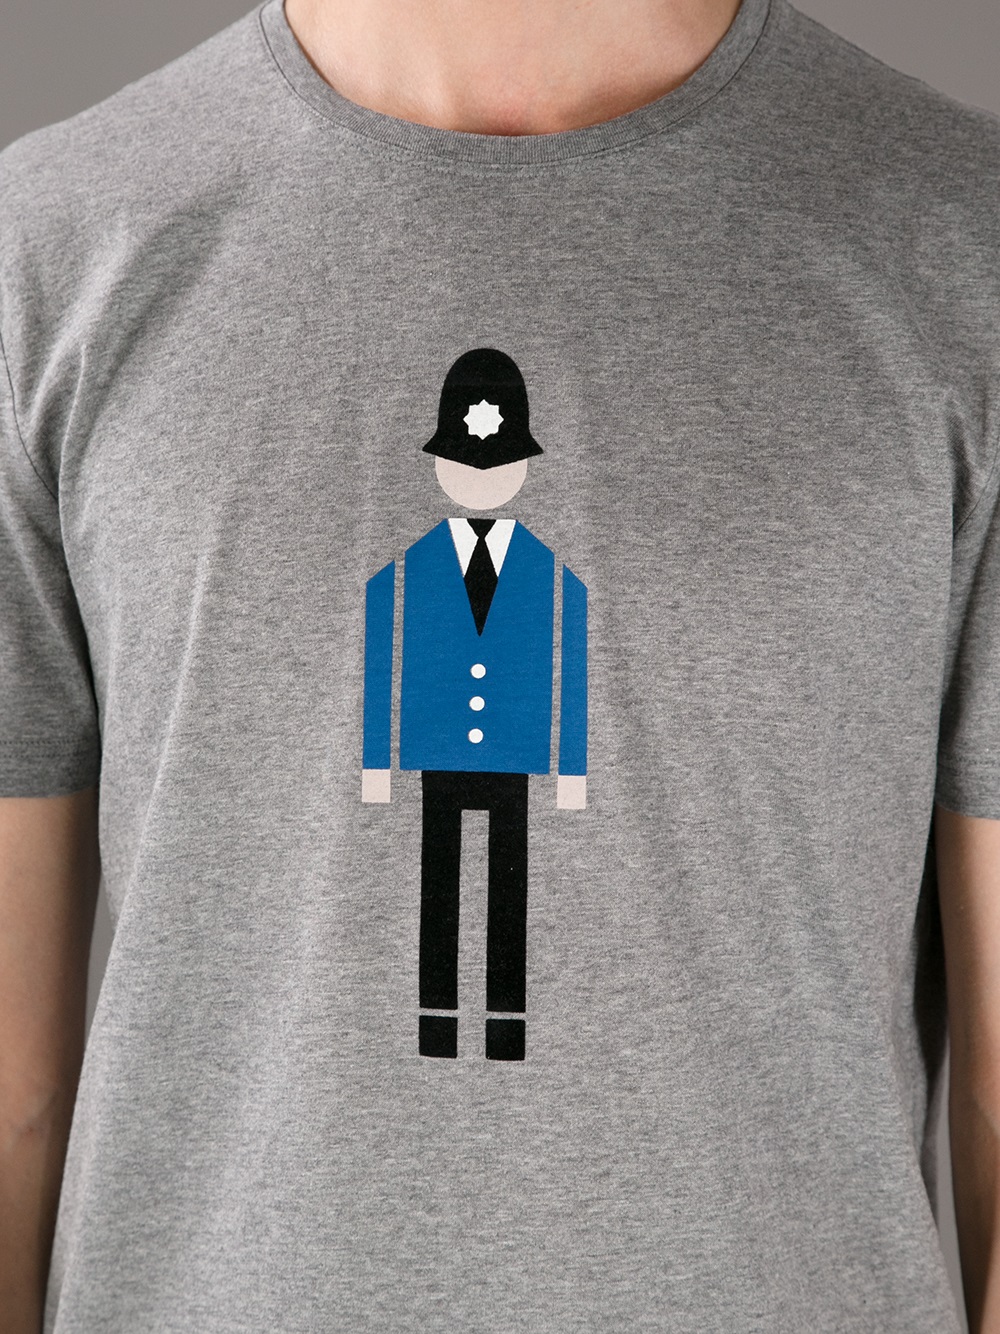 Burberry Prorsum Policeman Print Tshirt in Grey (Gray) for Men - Lyst